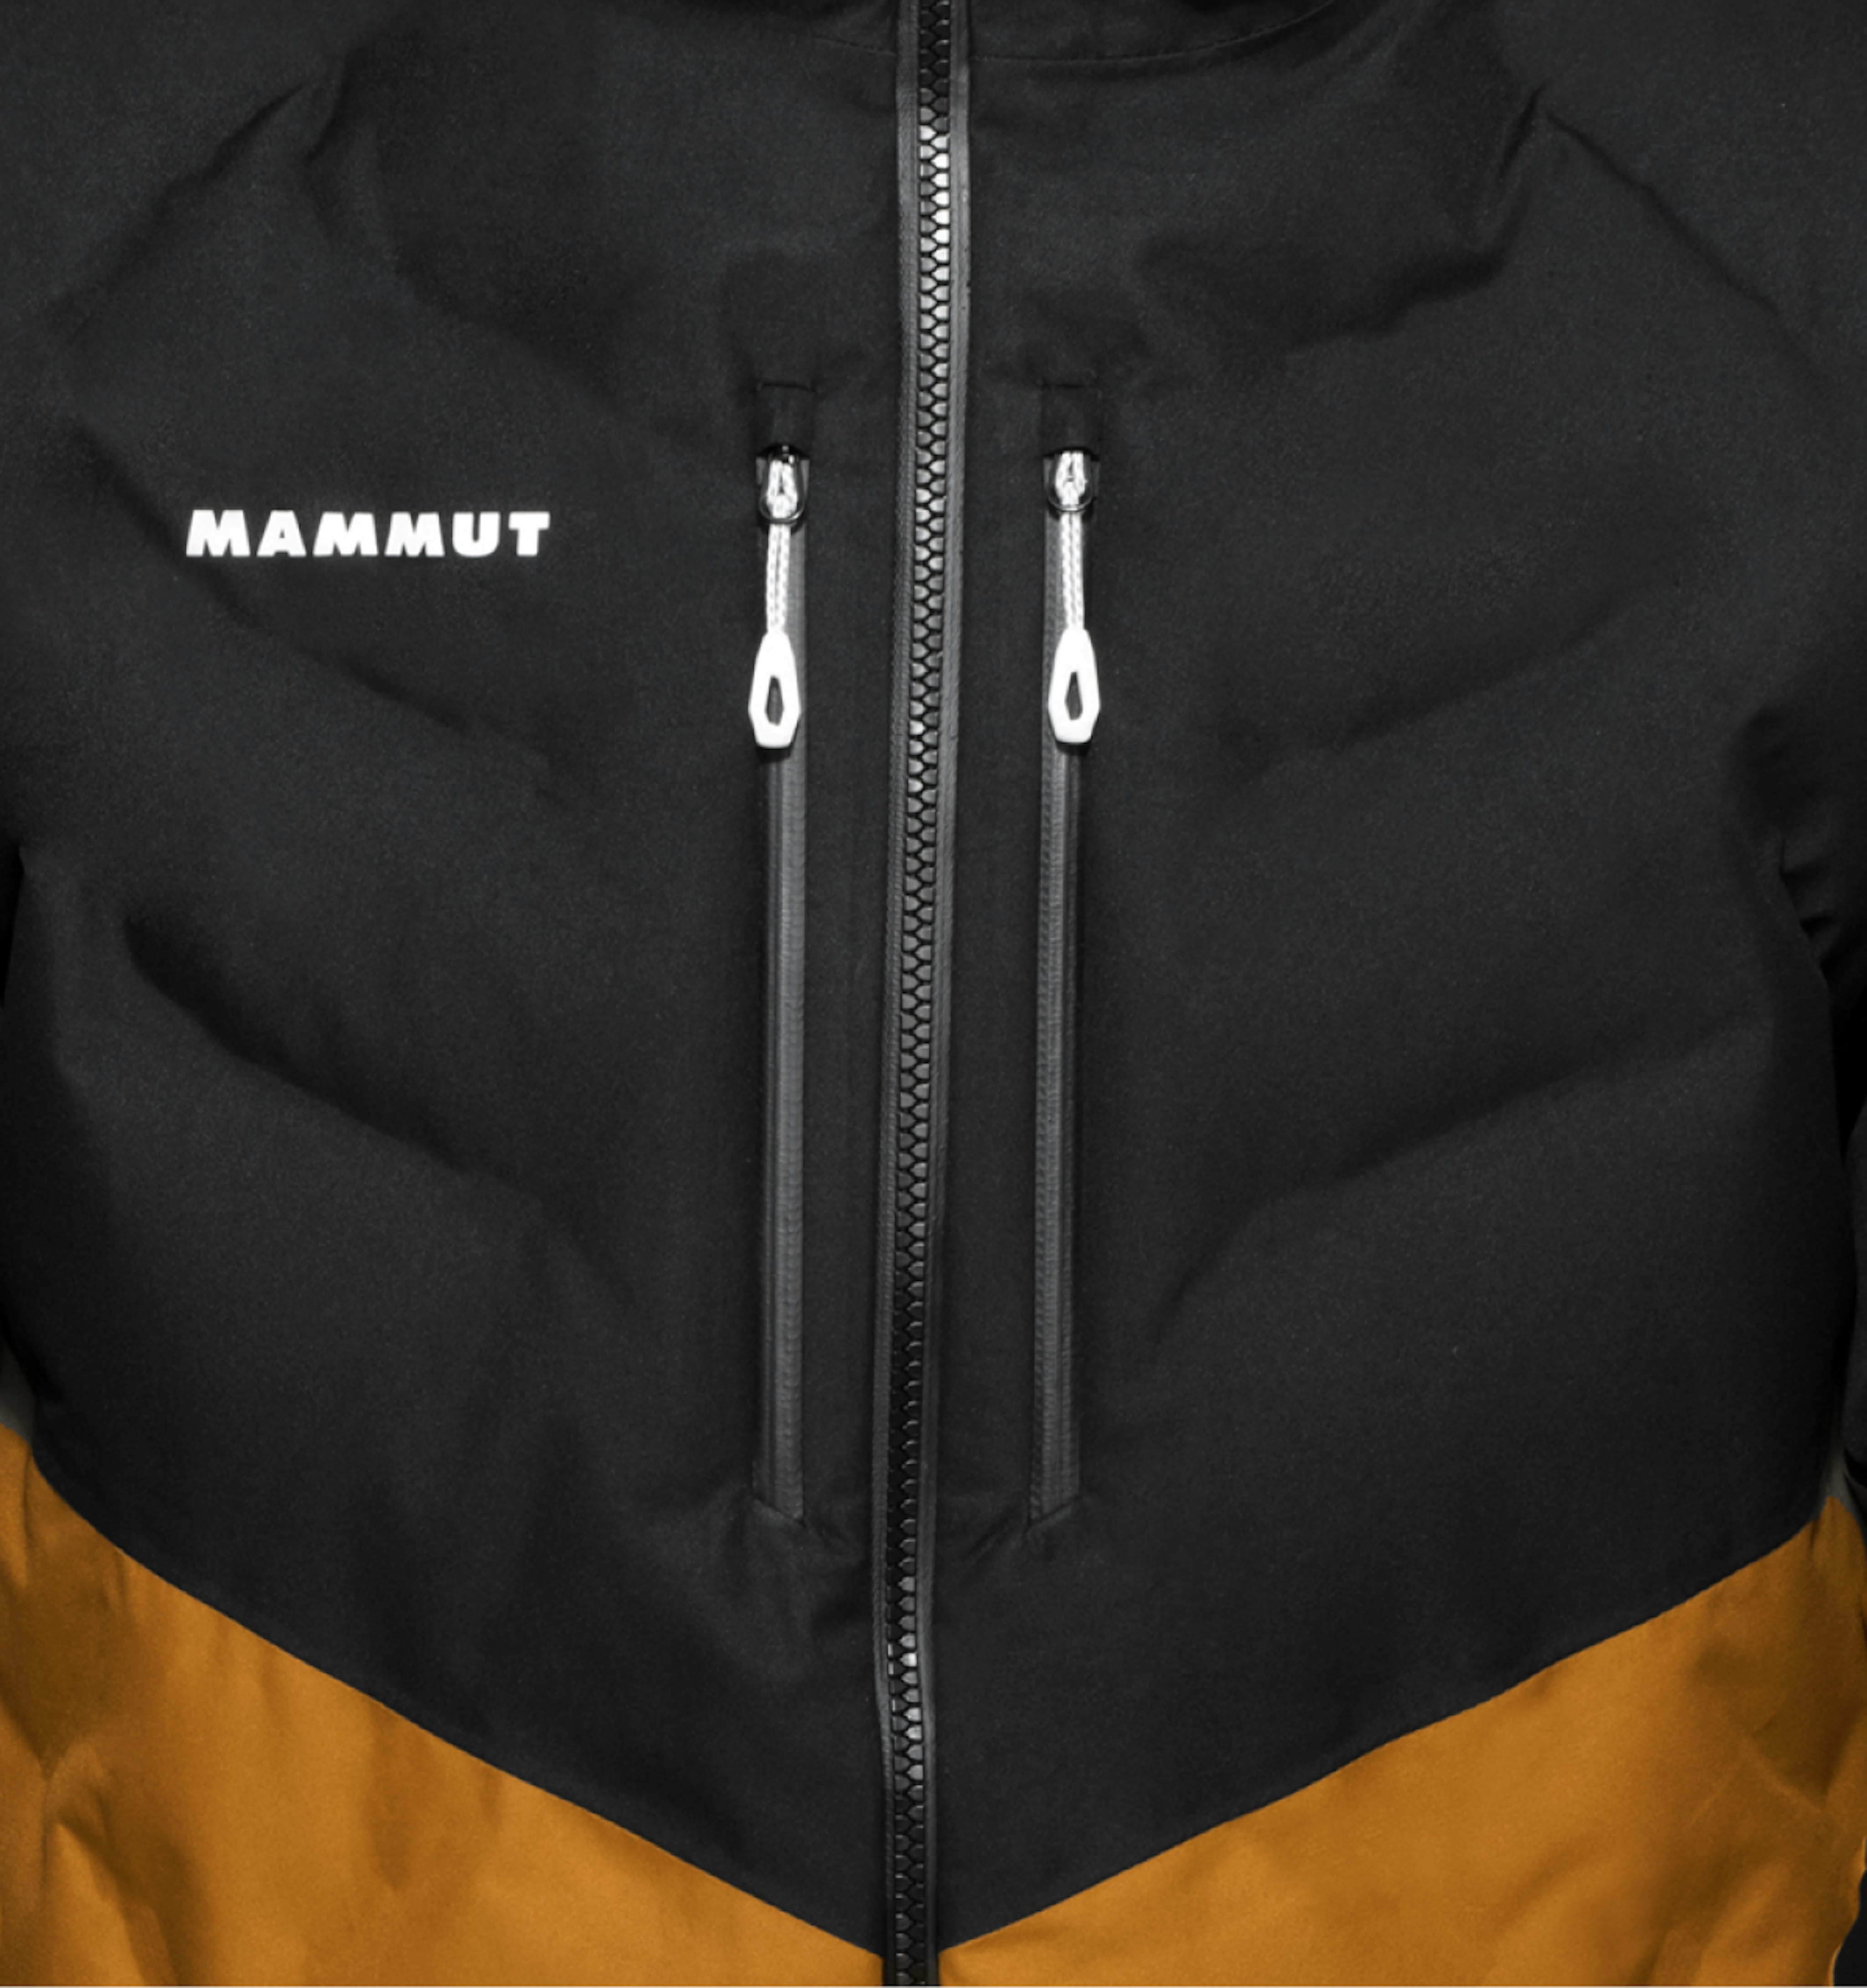 Mammut jacket for women